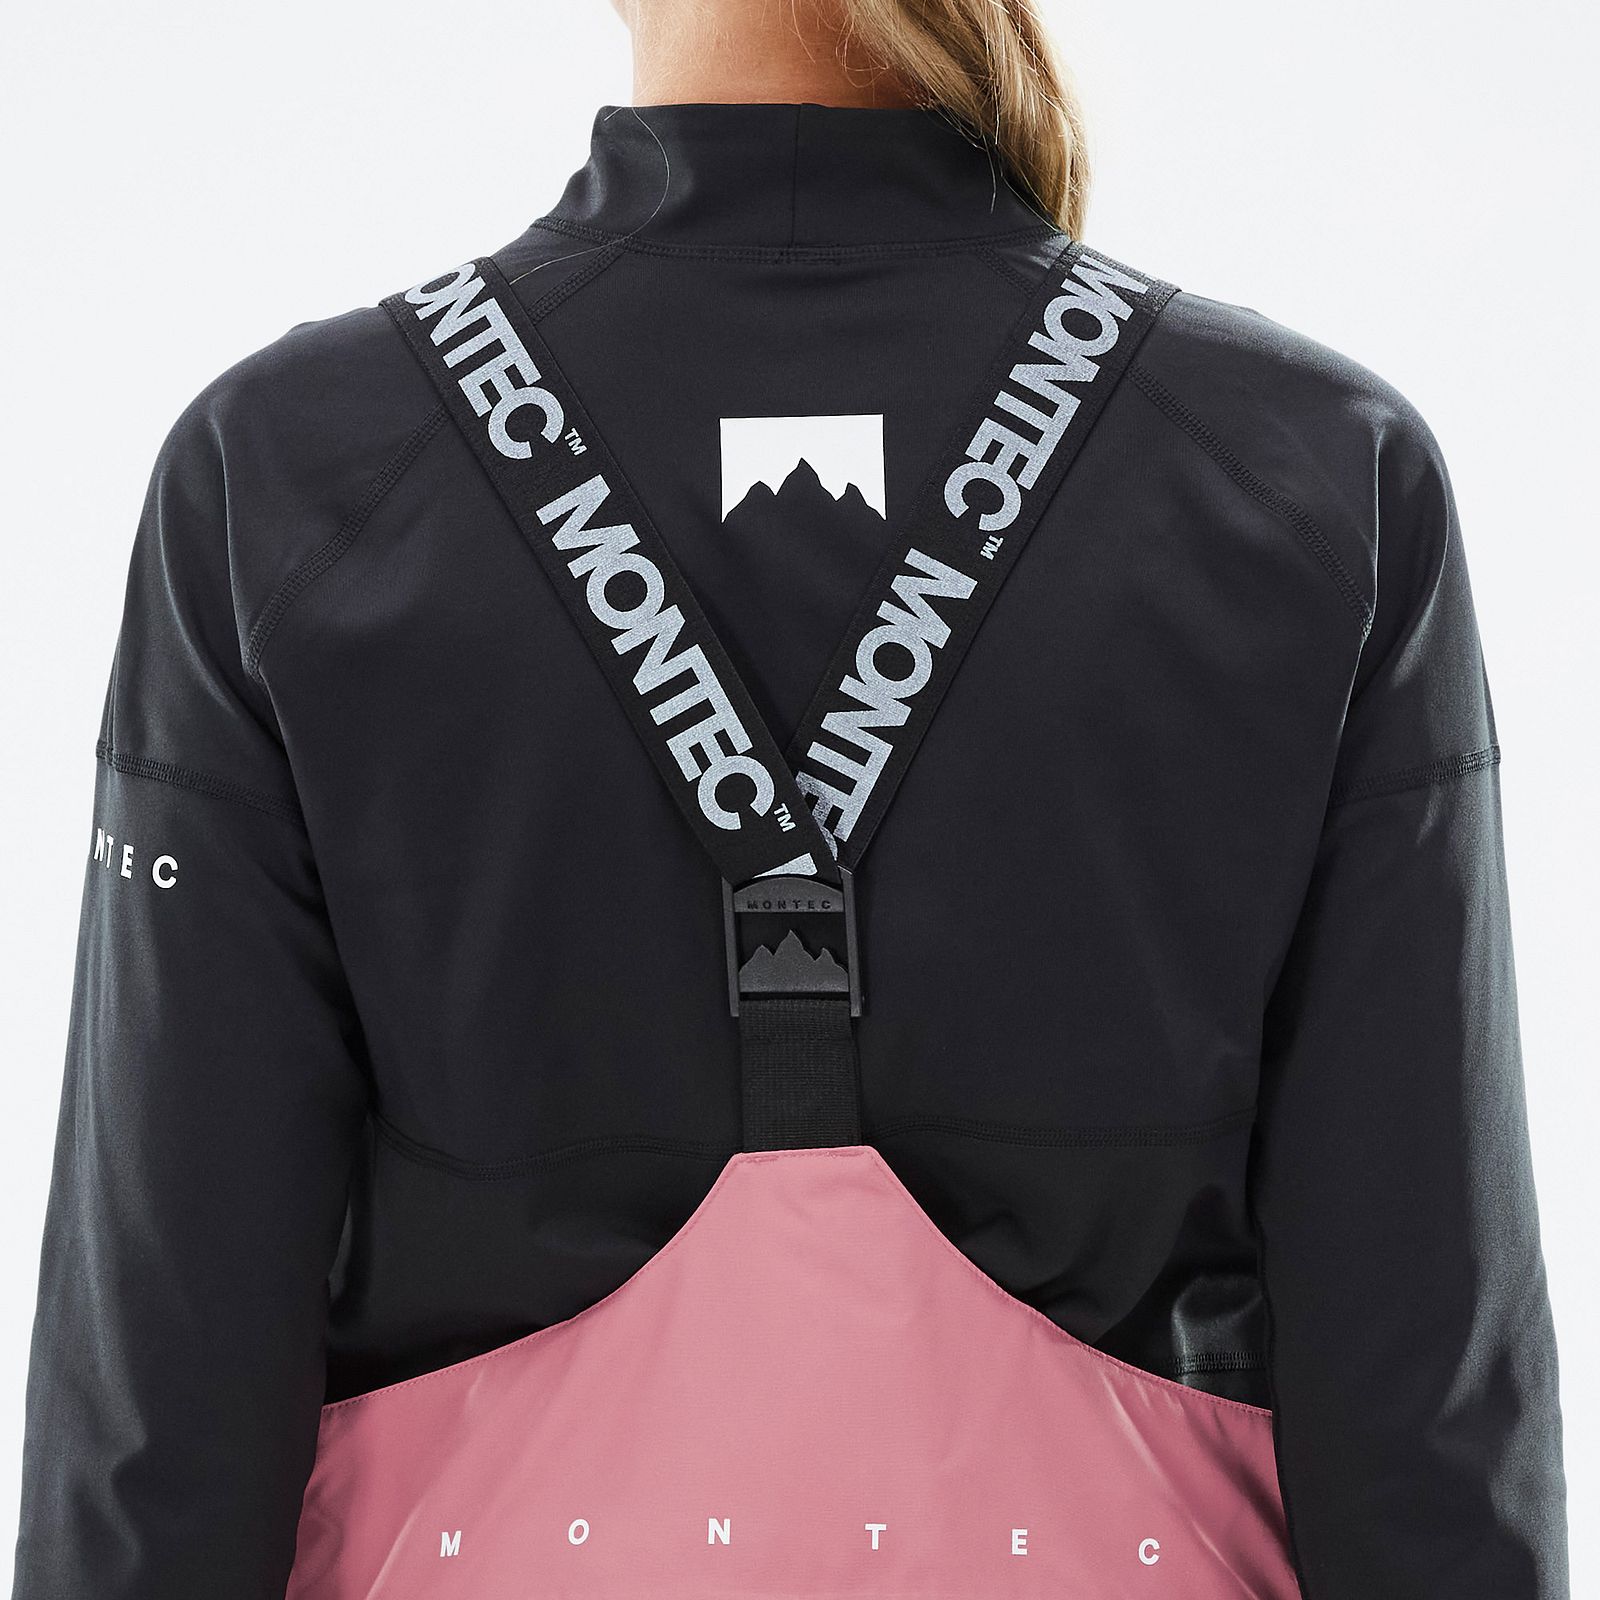 Fawk W Snowboardhose Damen Pink/Black